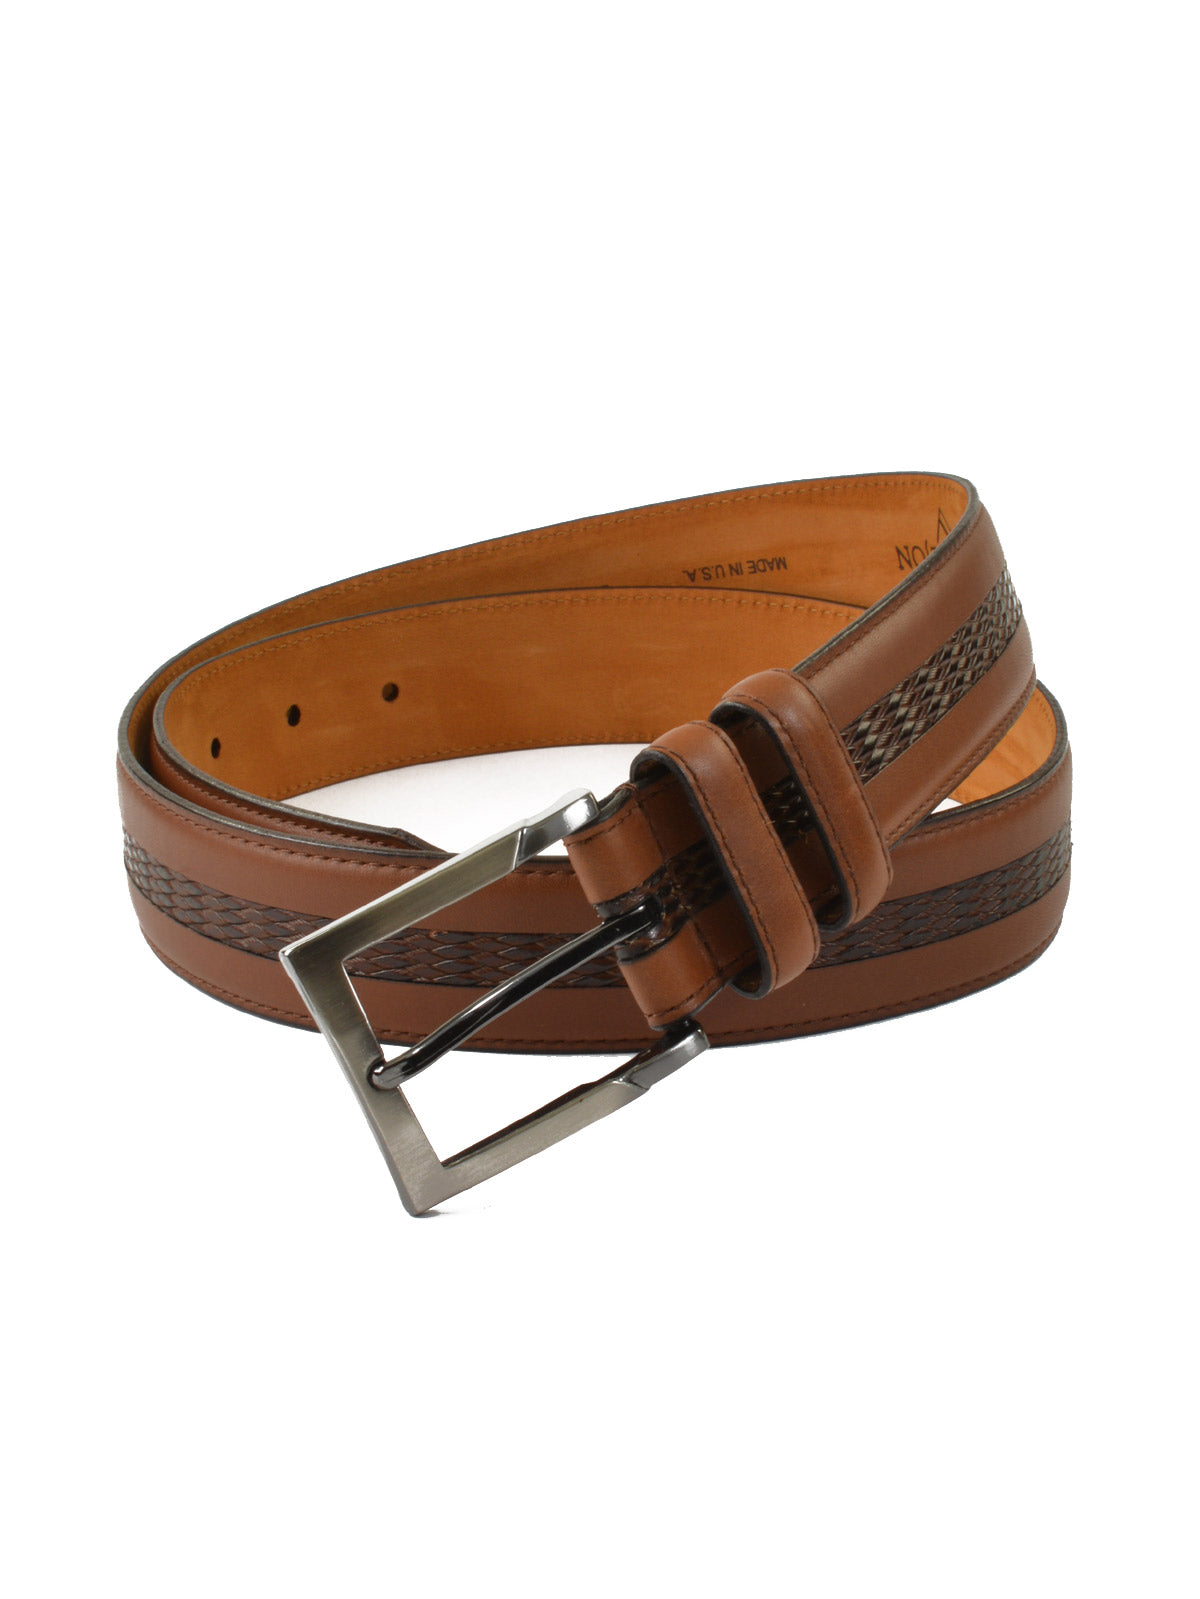 Lejon Genuine Italian Leather Bayside Belts in Tan - Big Man Sizes